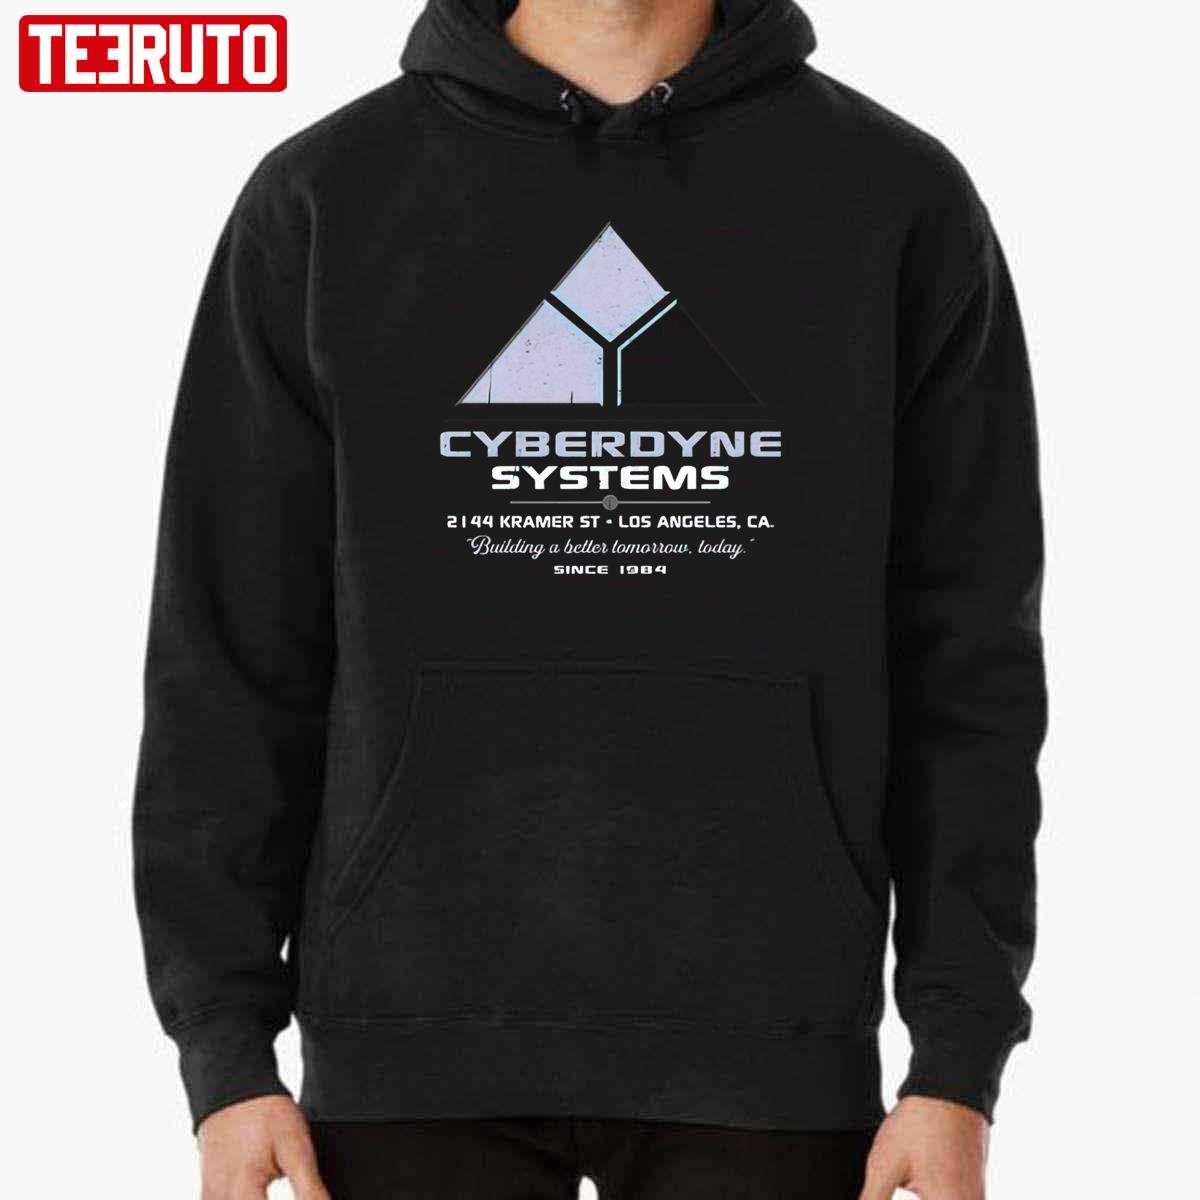 Cyberdyne Systems Building A Better Tomorrow Today Unisex Sweatshirt